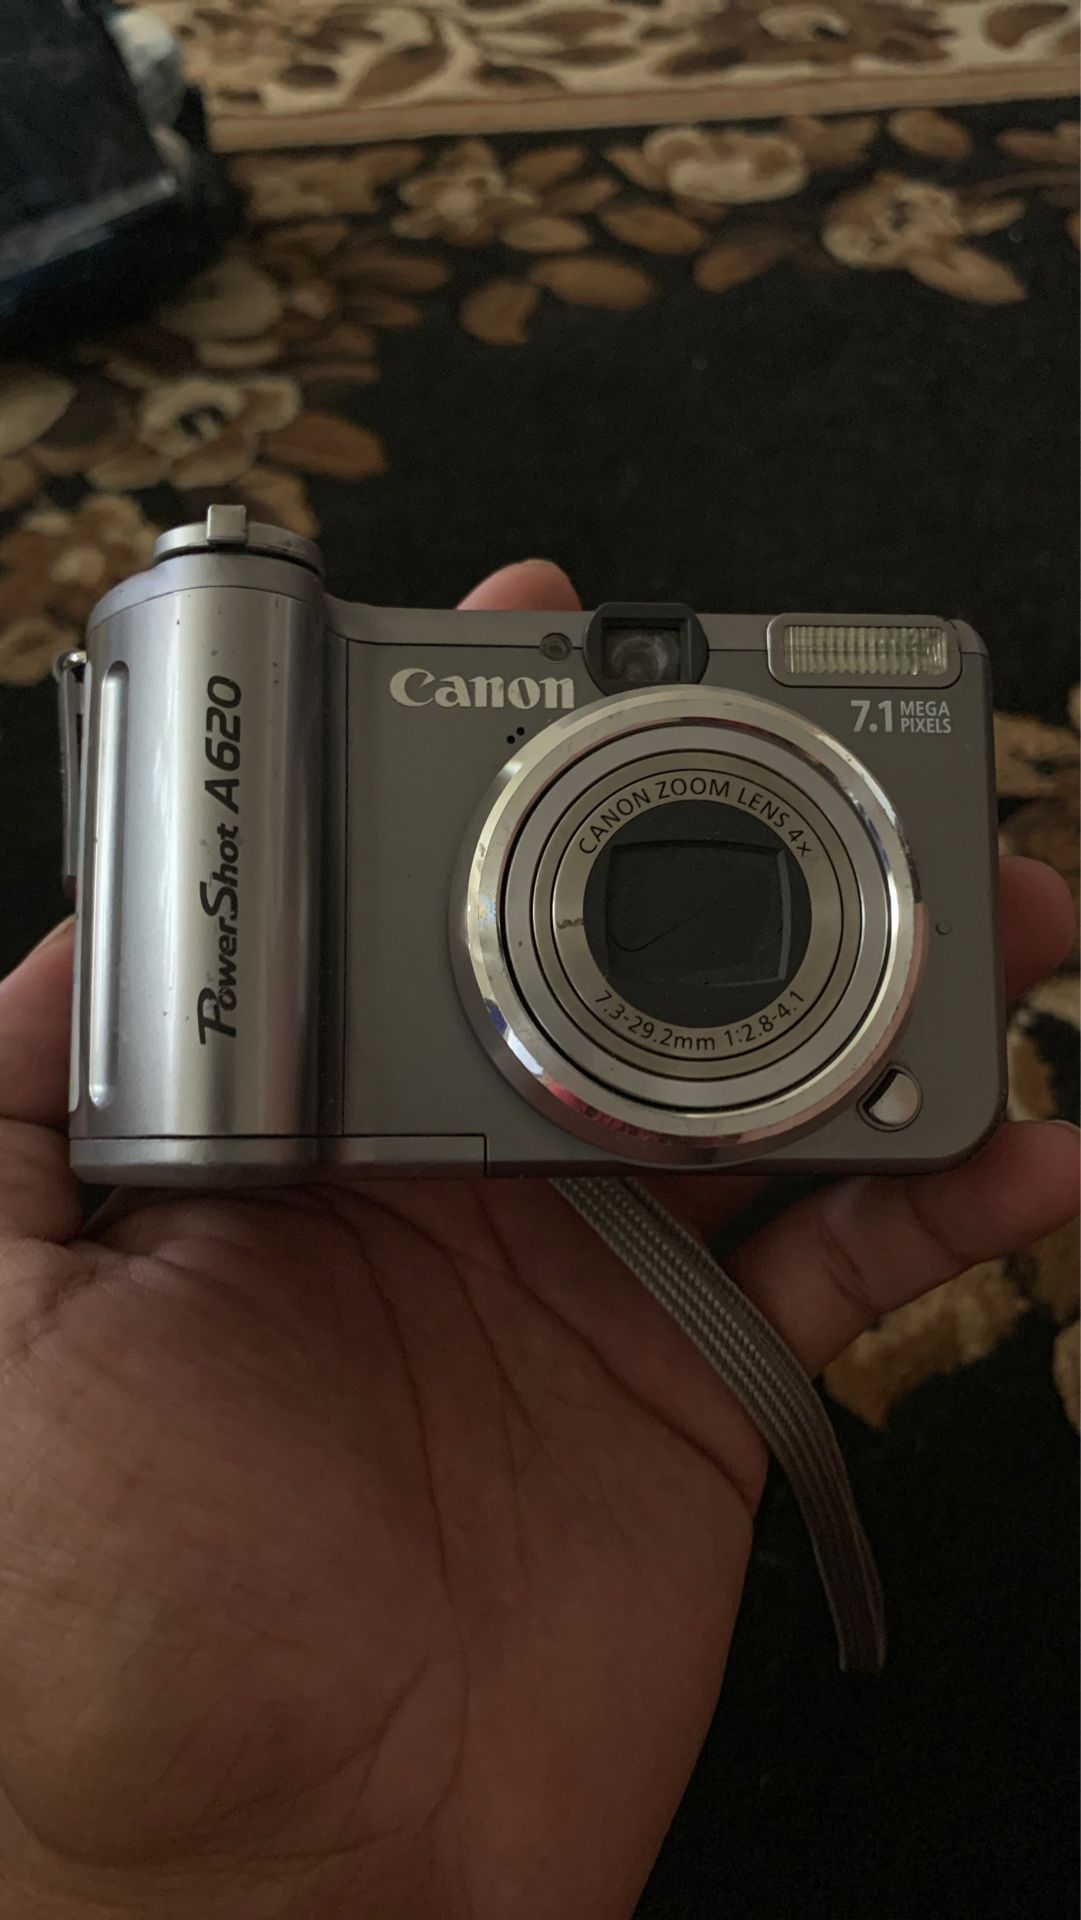 Canon PowerShot A620 7.1 MP Compact Digital Camera